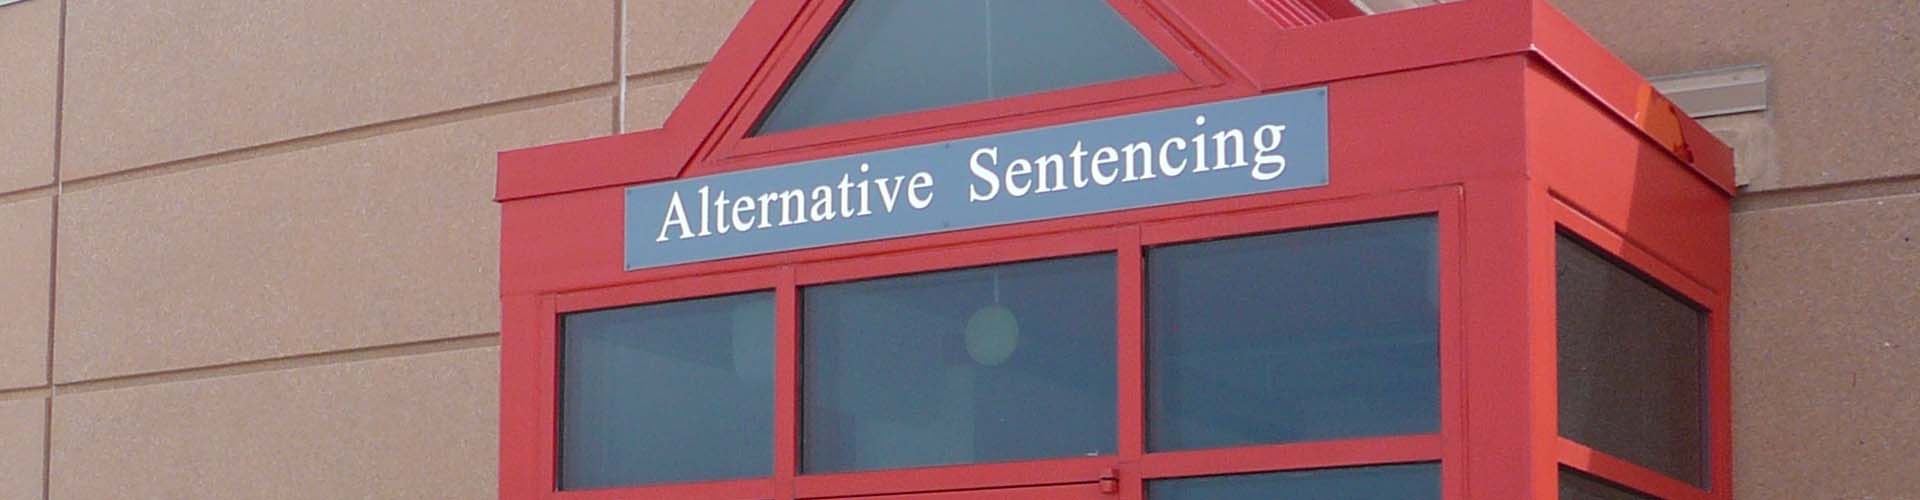 Alternative Sentencing enterence